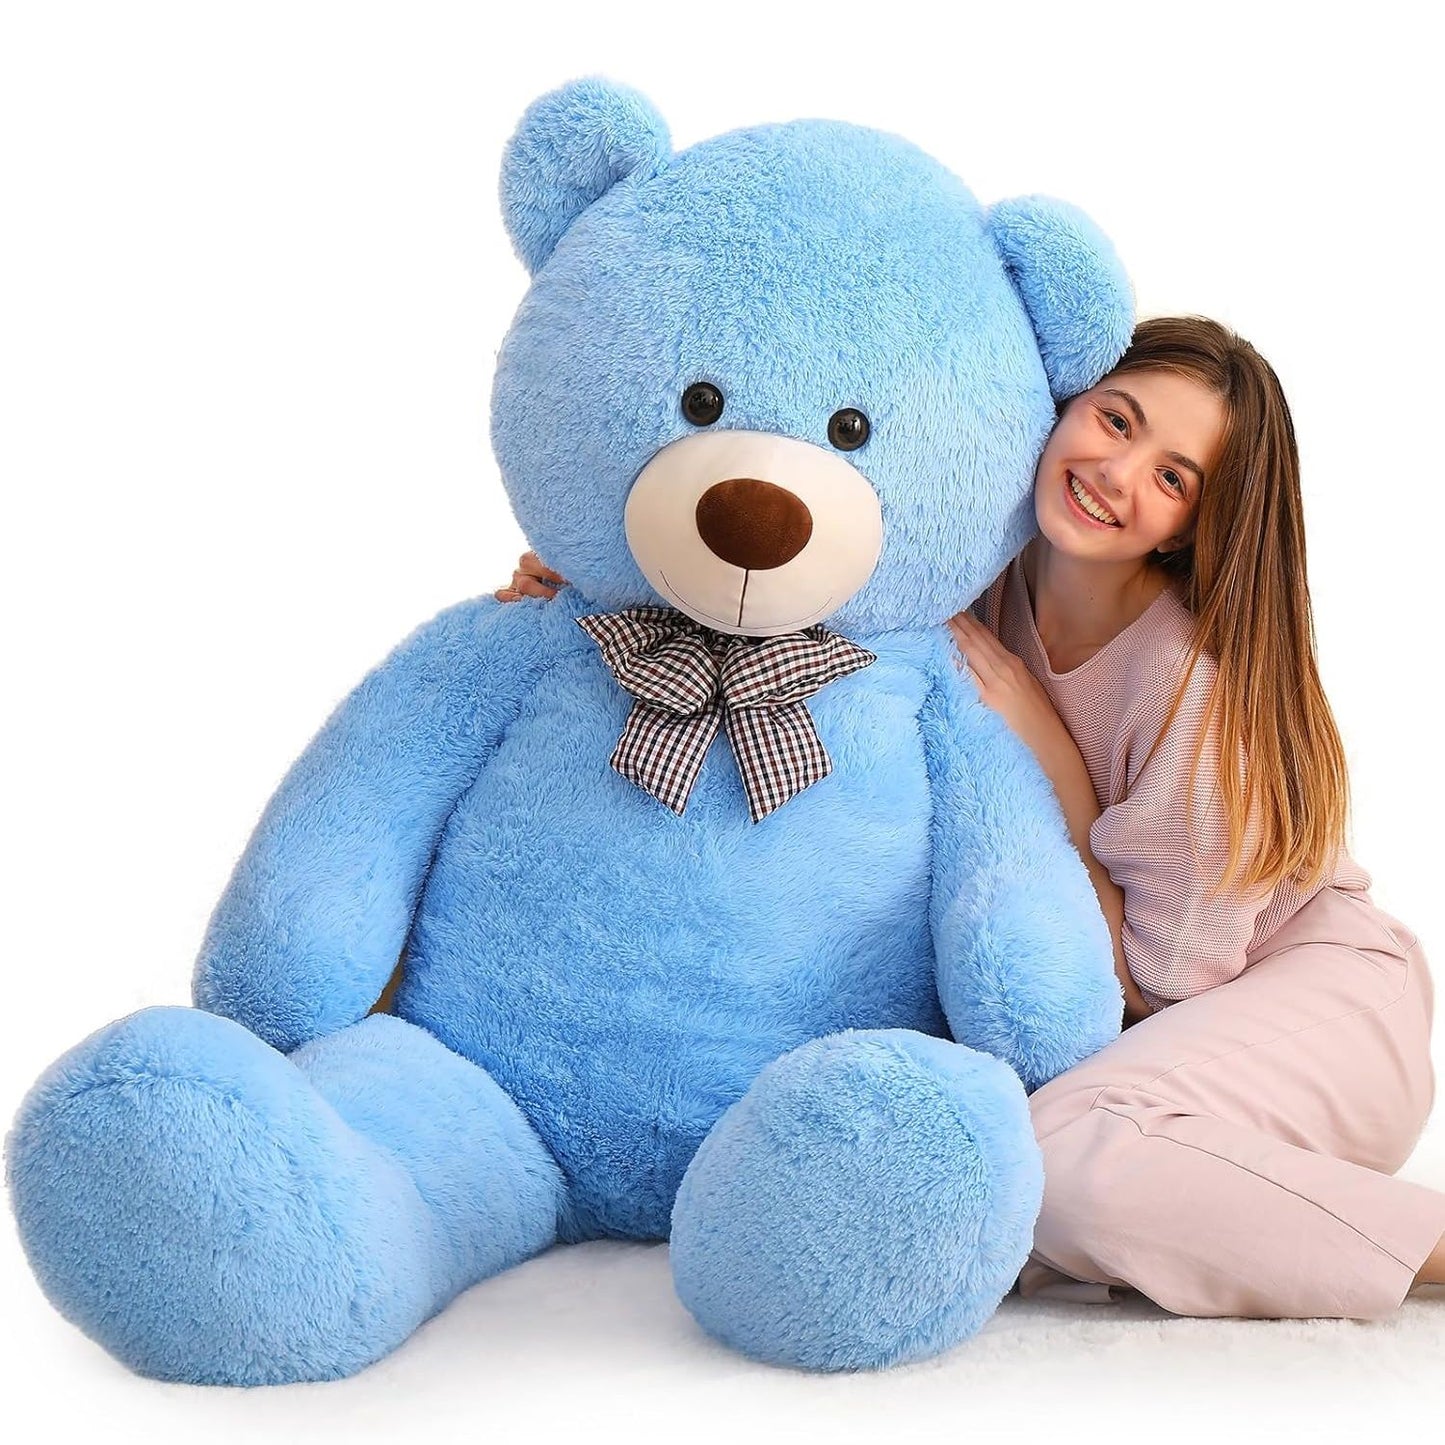 Giant Teddy Bear Stuffed Animal Toy, Blue, 55 Inches - MorisMos Plush Toys